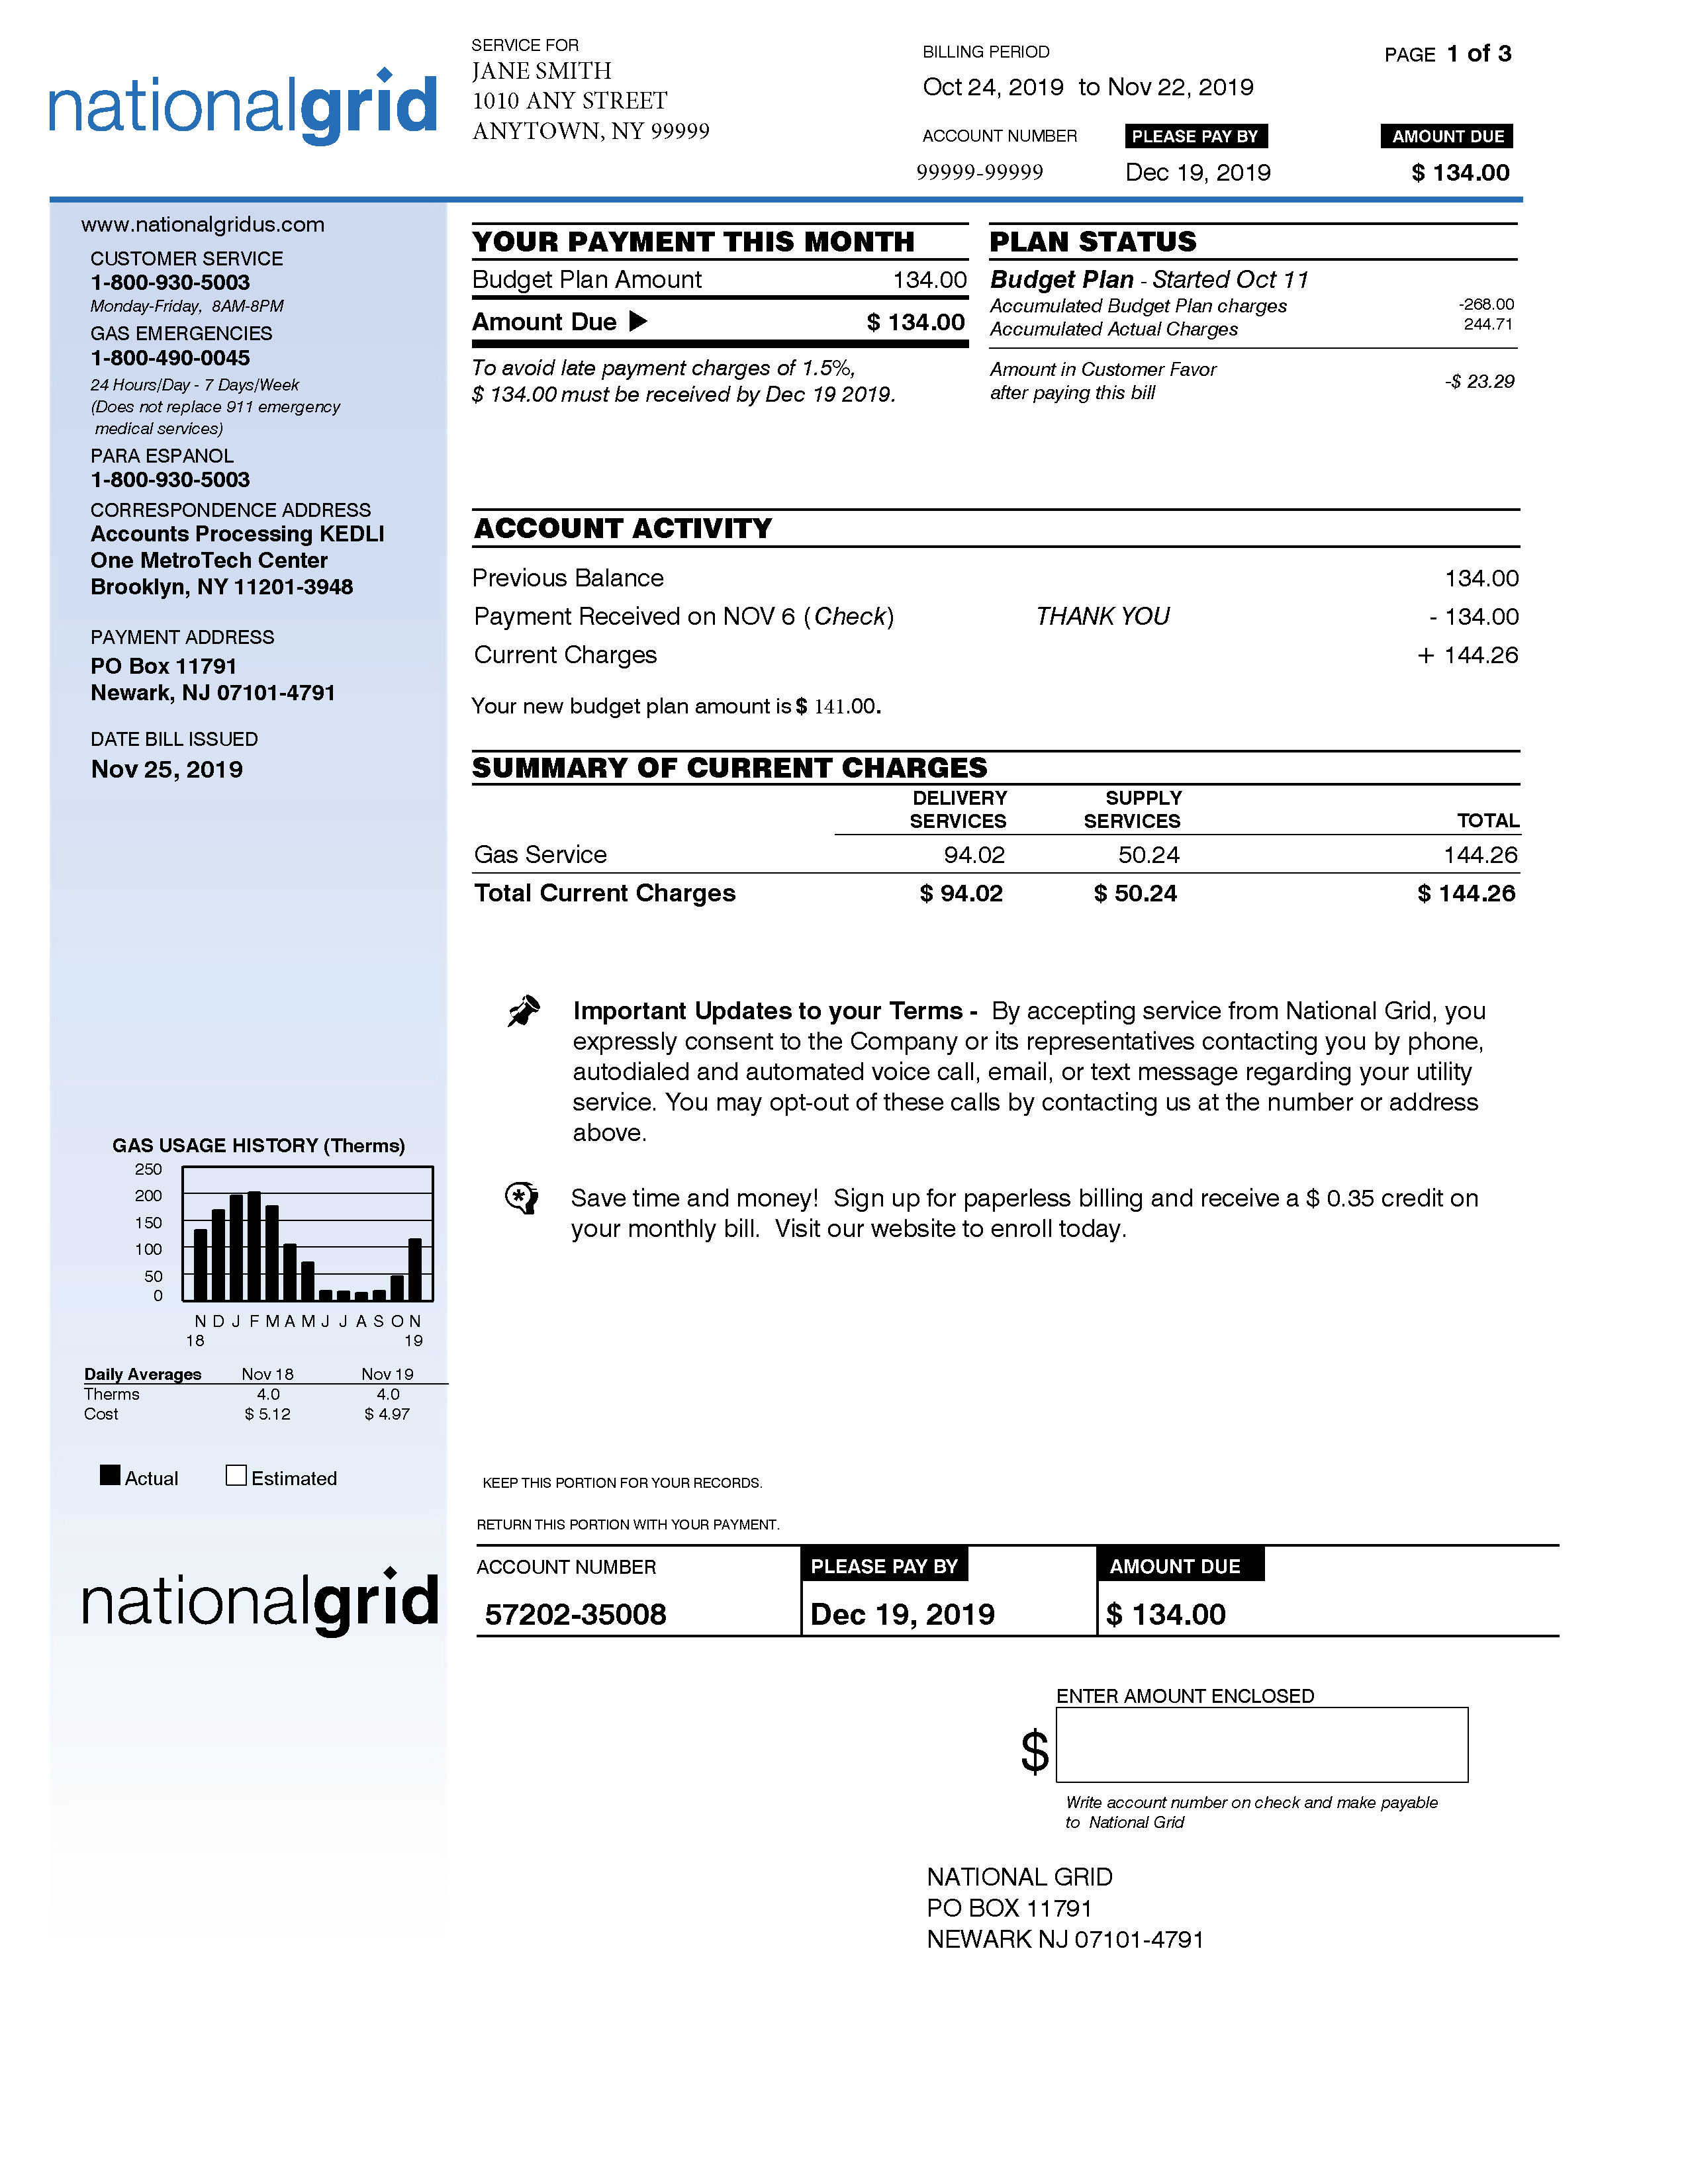 Budget Bill | National Grid